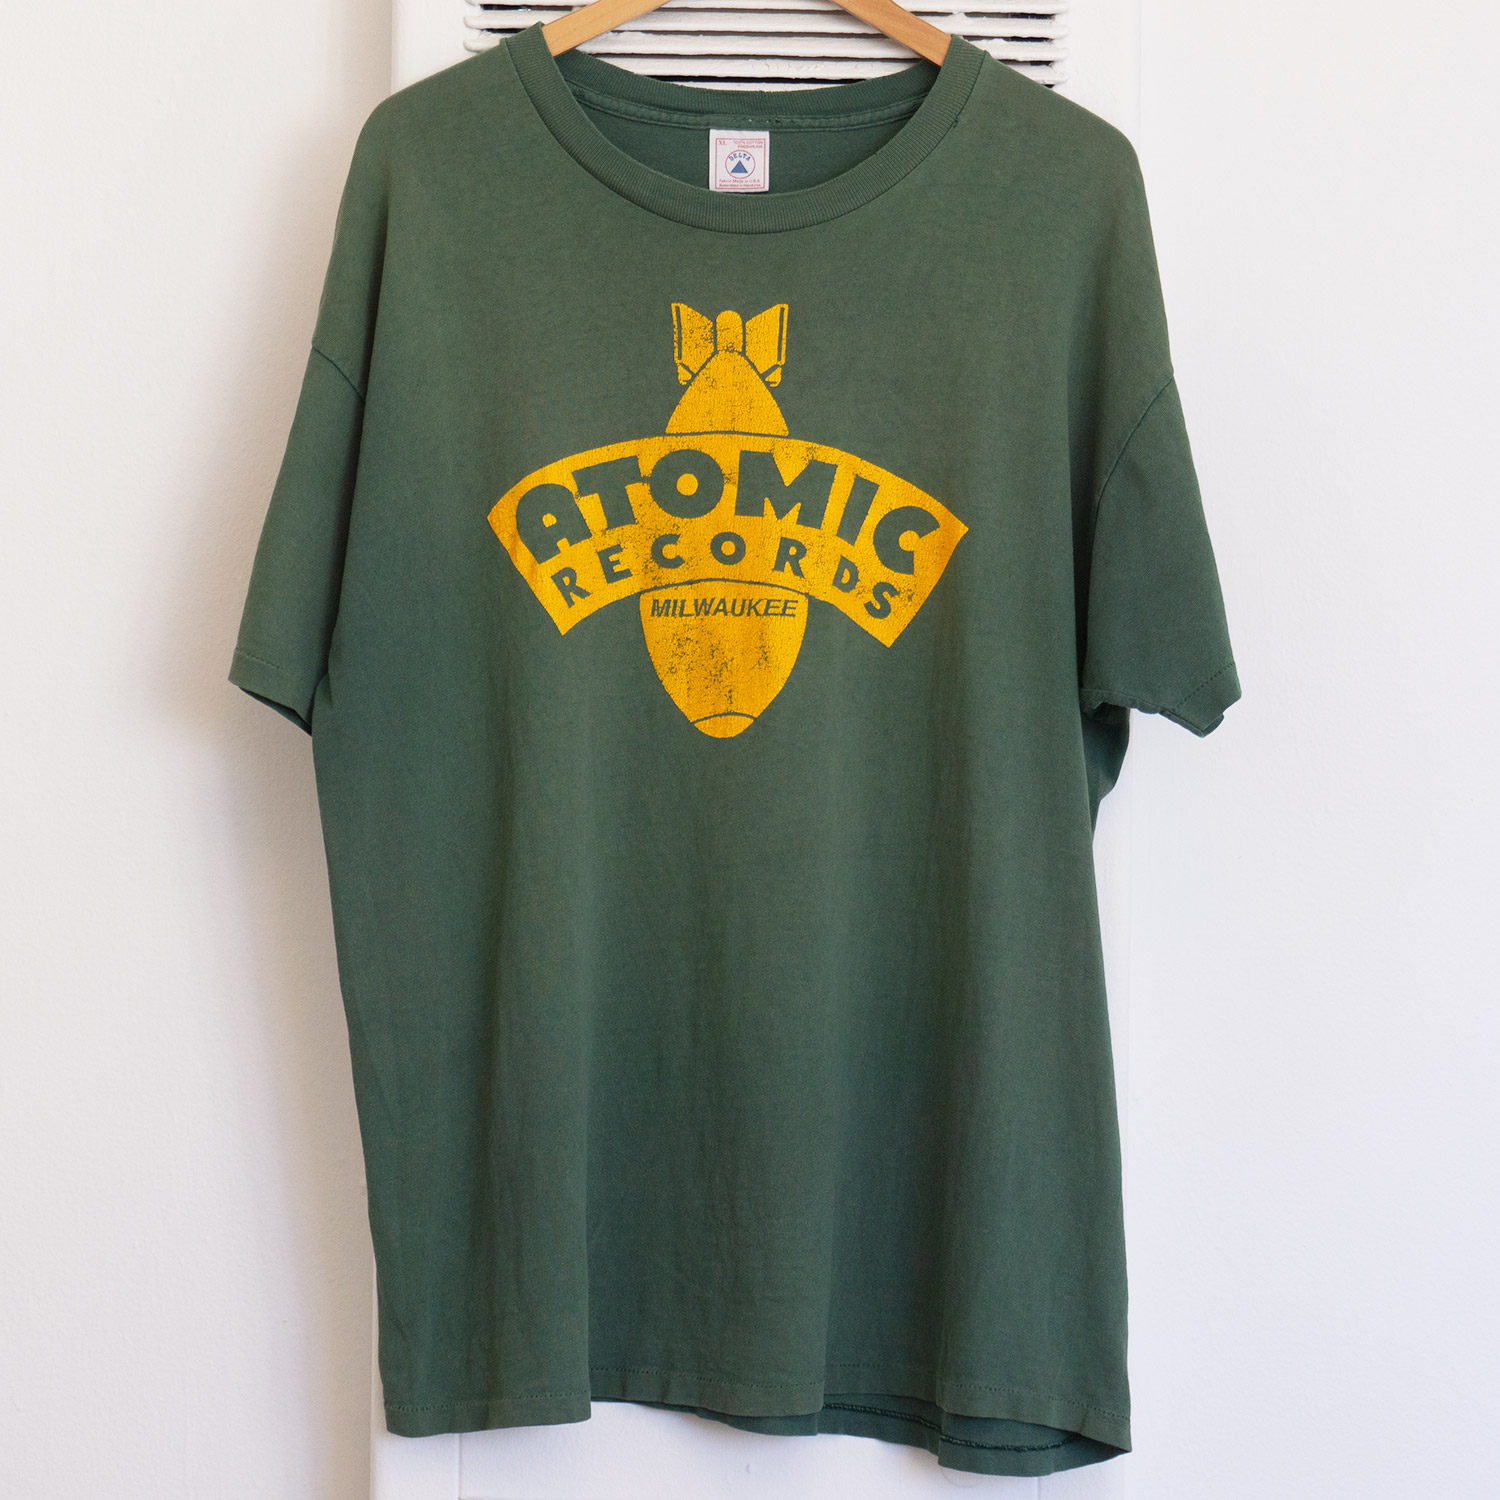 Atomic Records T-shirt